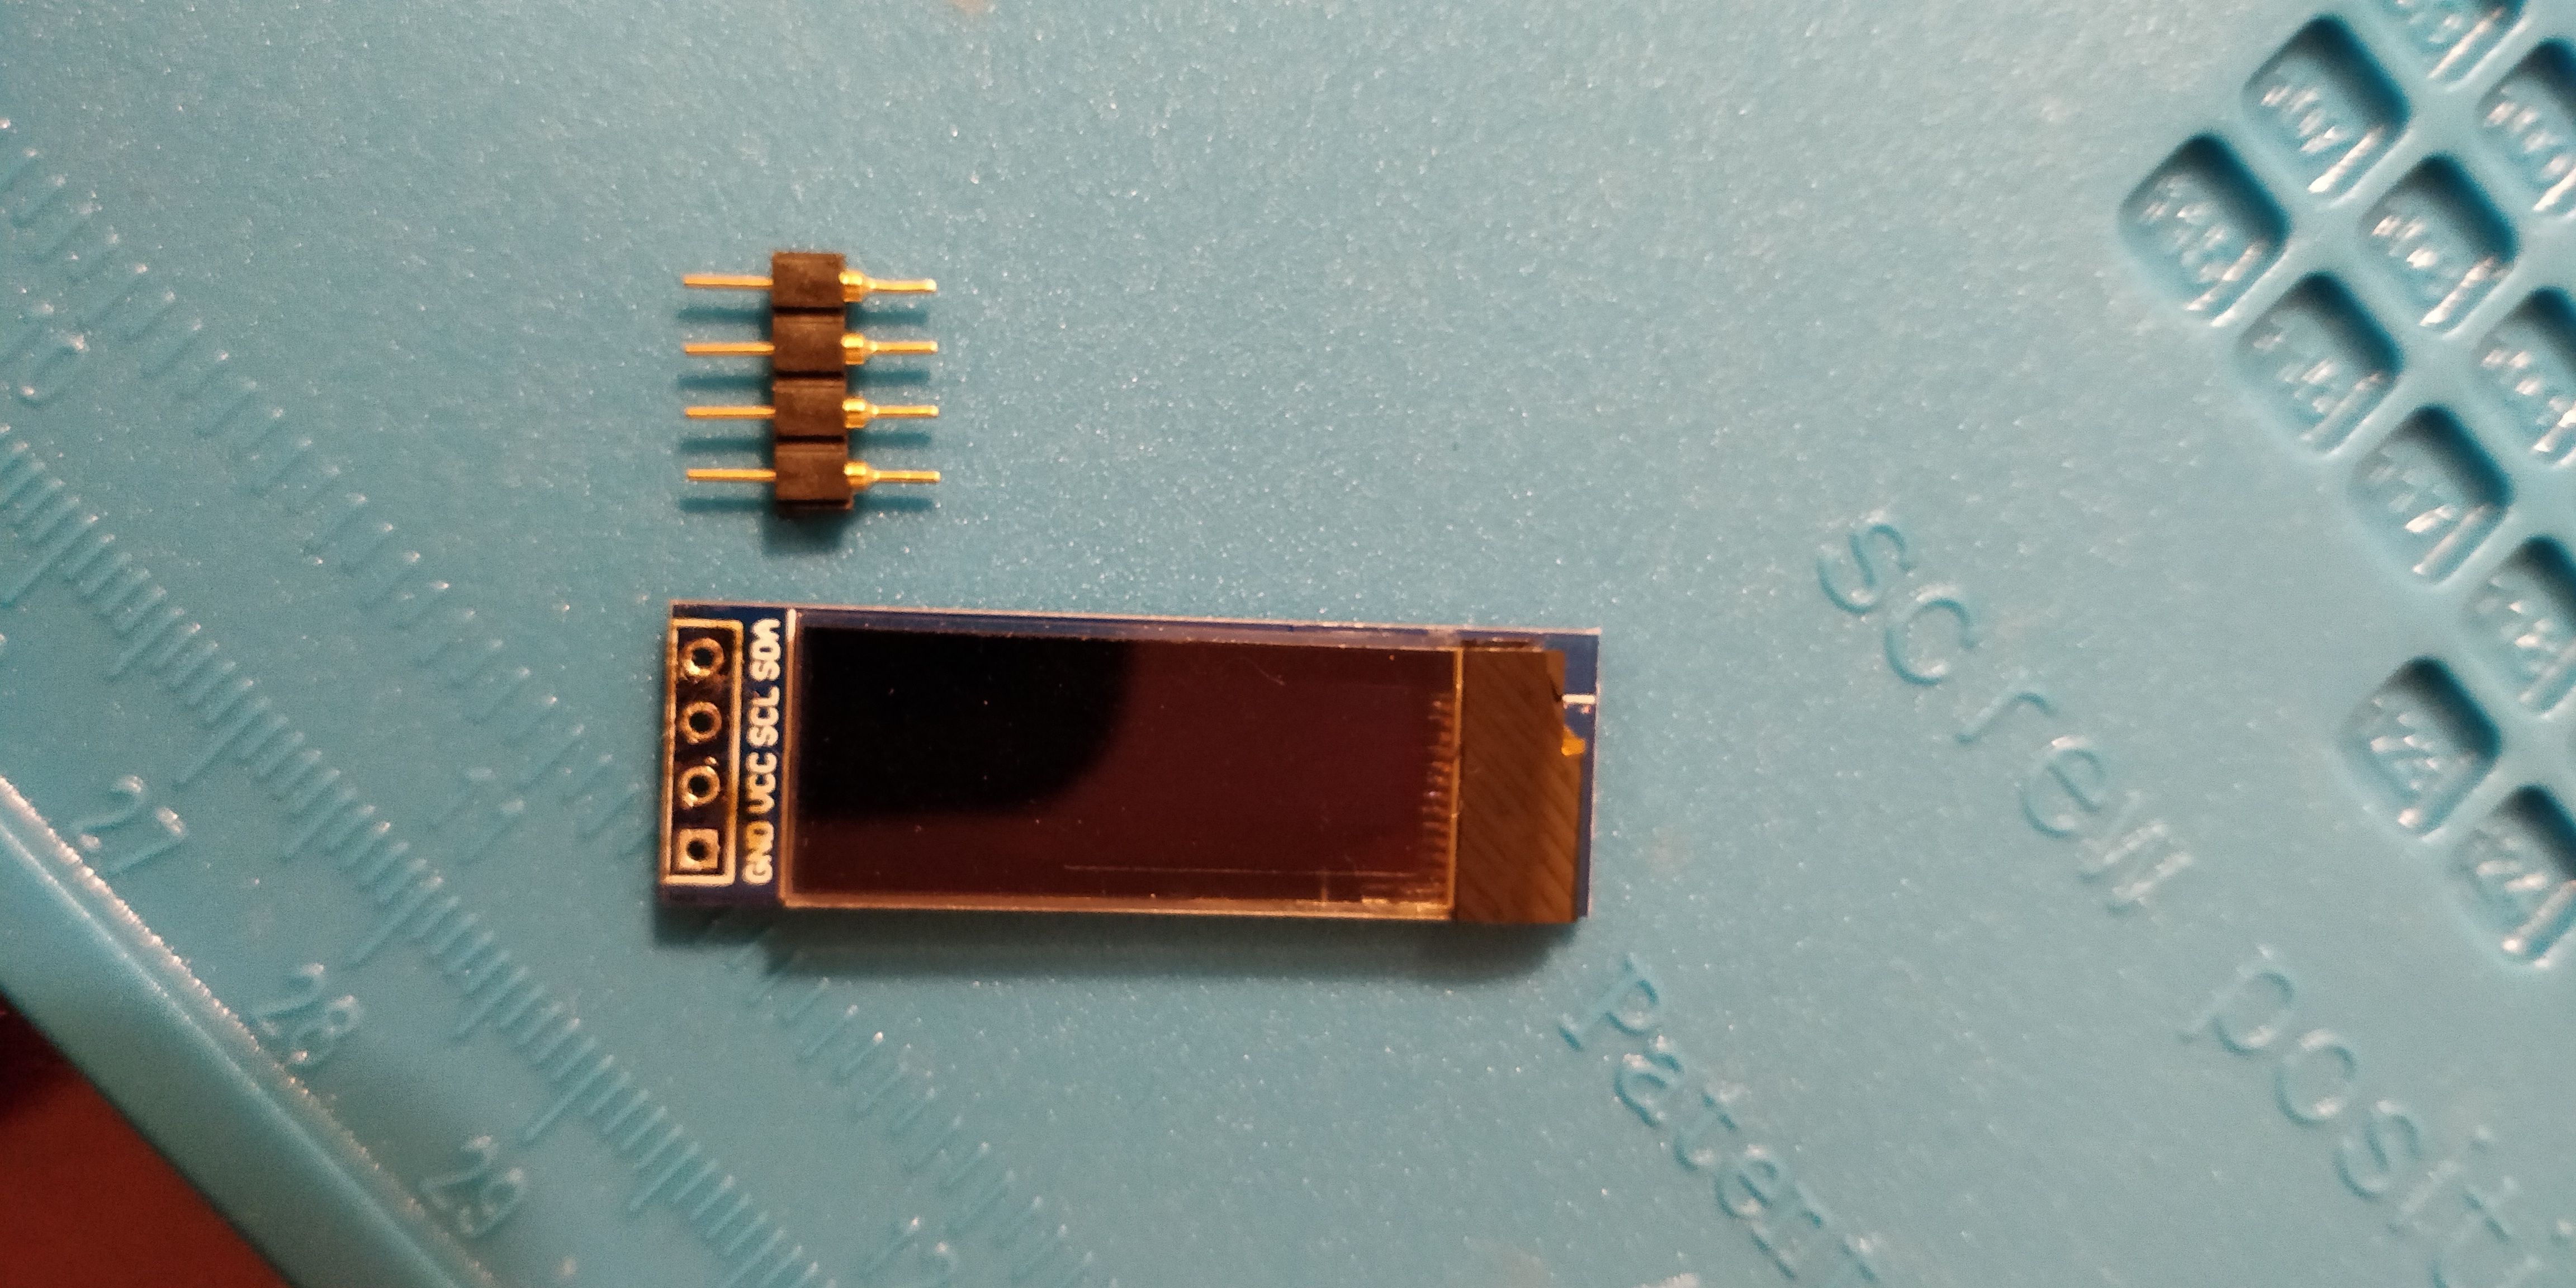 step 16 - corne crkbd - prepare the compatible socket connectors for soldering